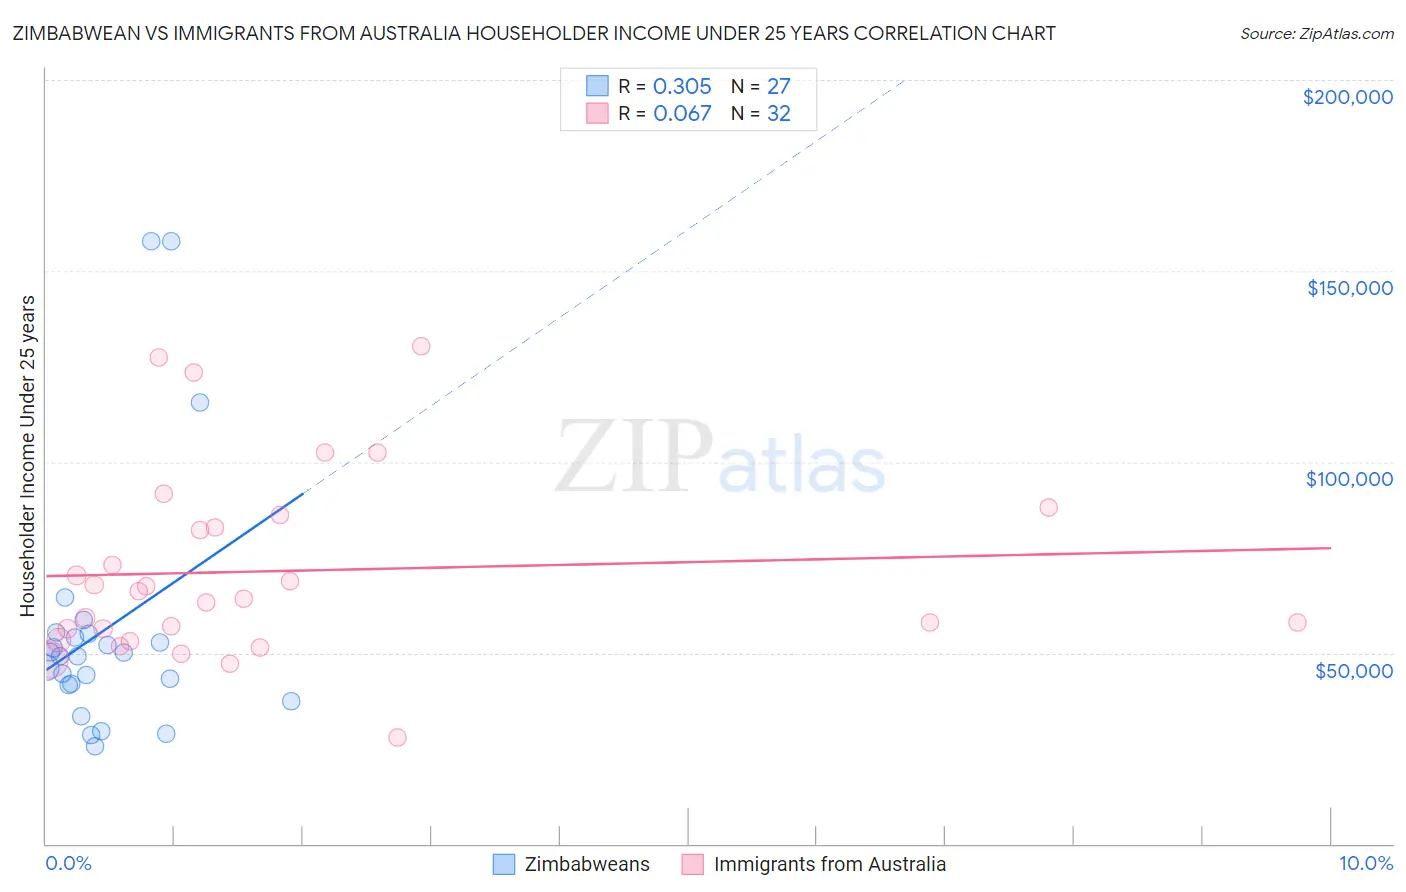 Zimbabwean vs Immigrants from Australia Householder Income Under 25 years